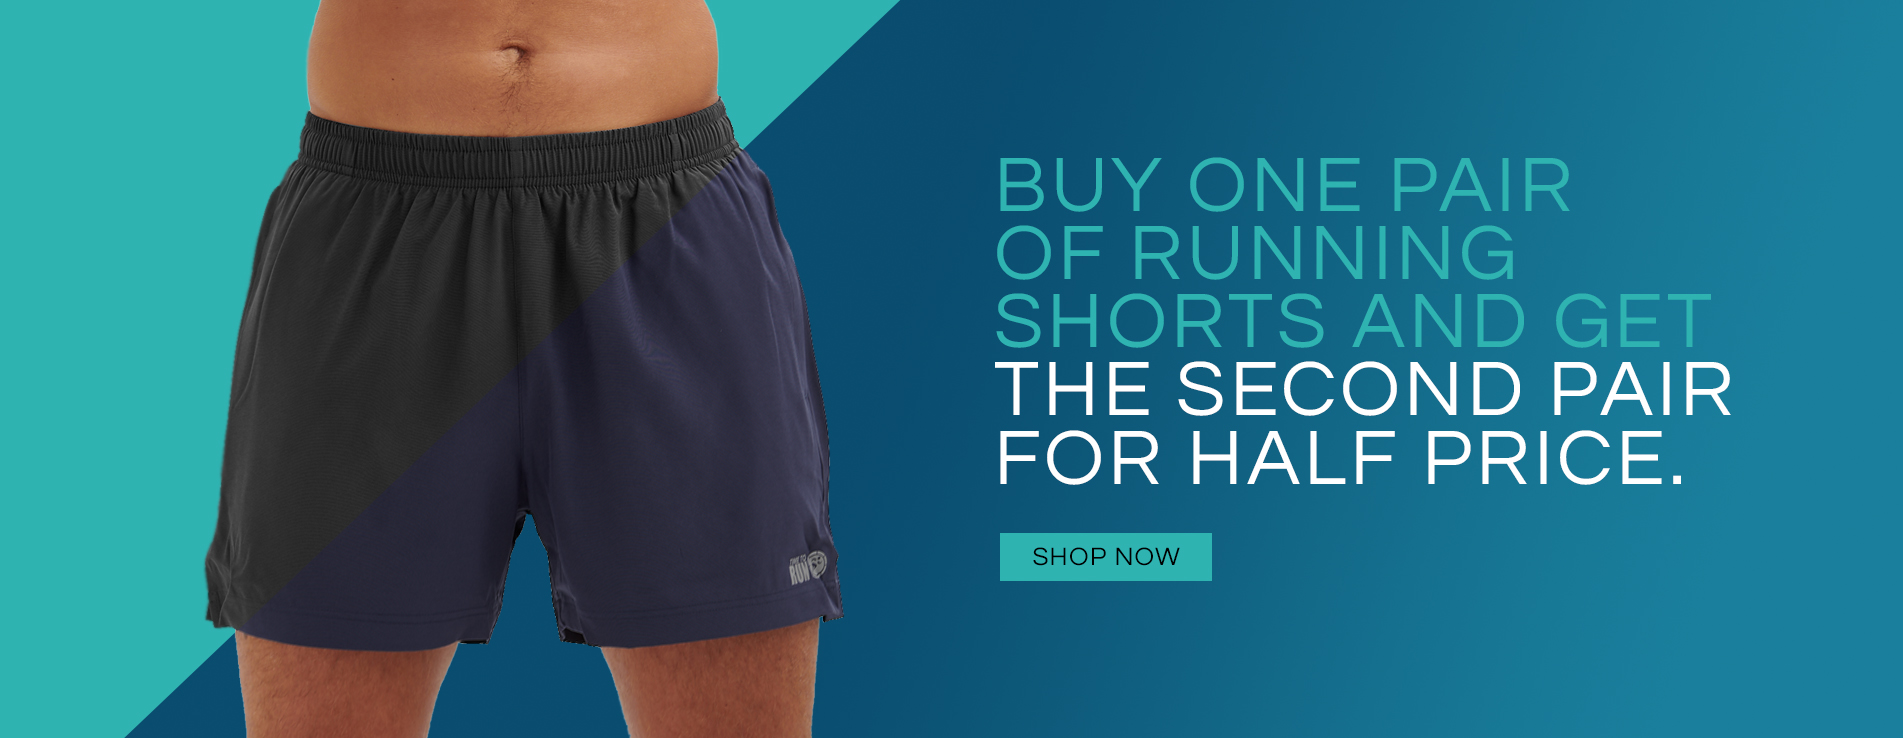 Mens Running Shorts Buy One Get One Half Price